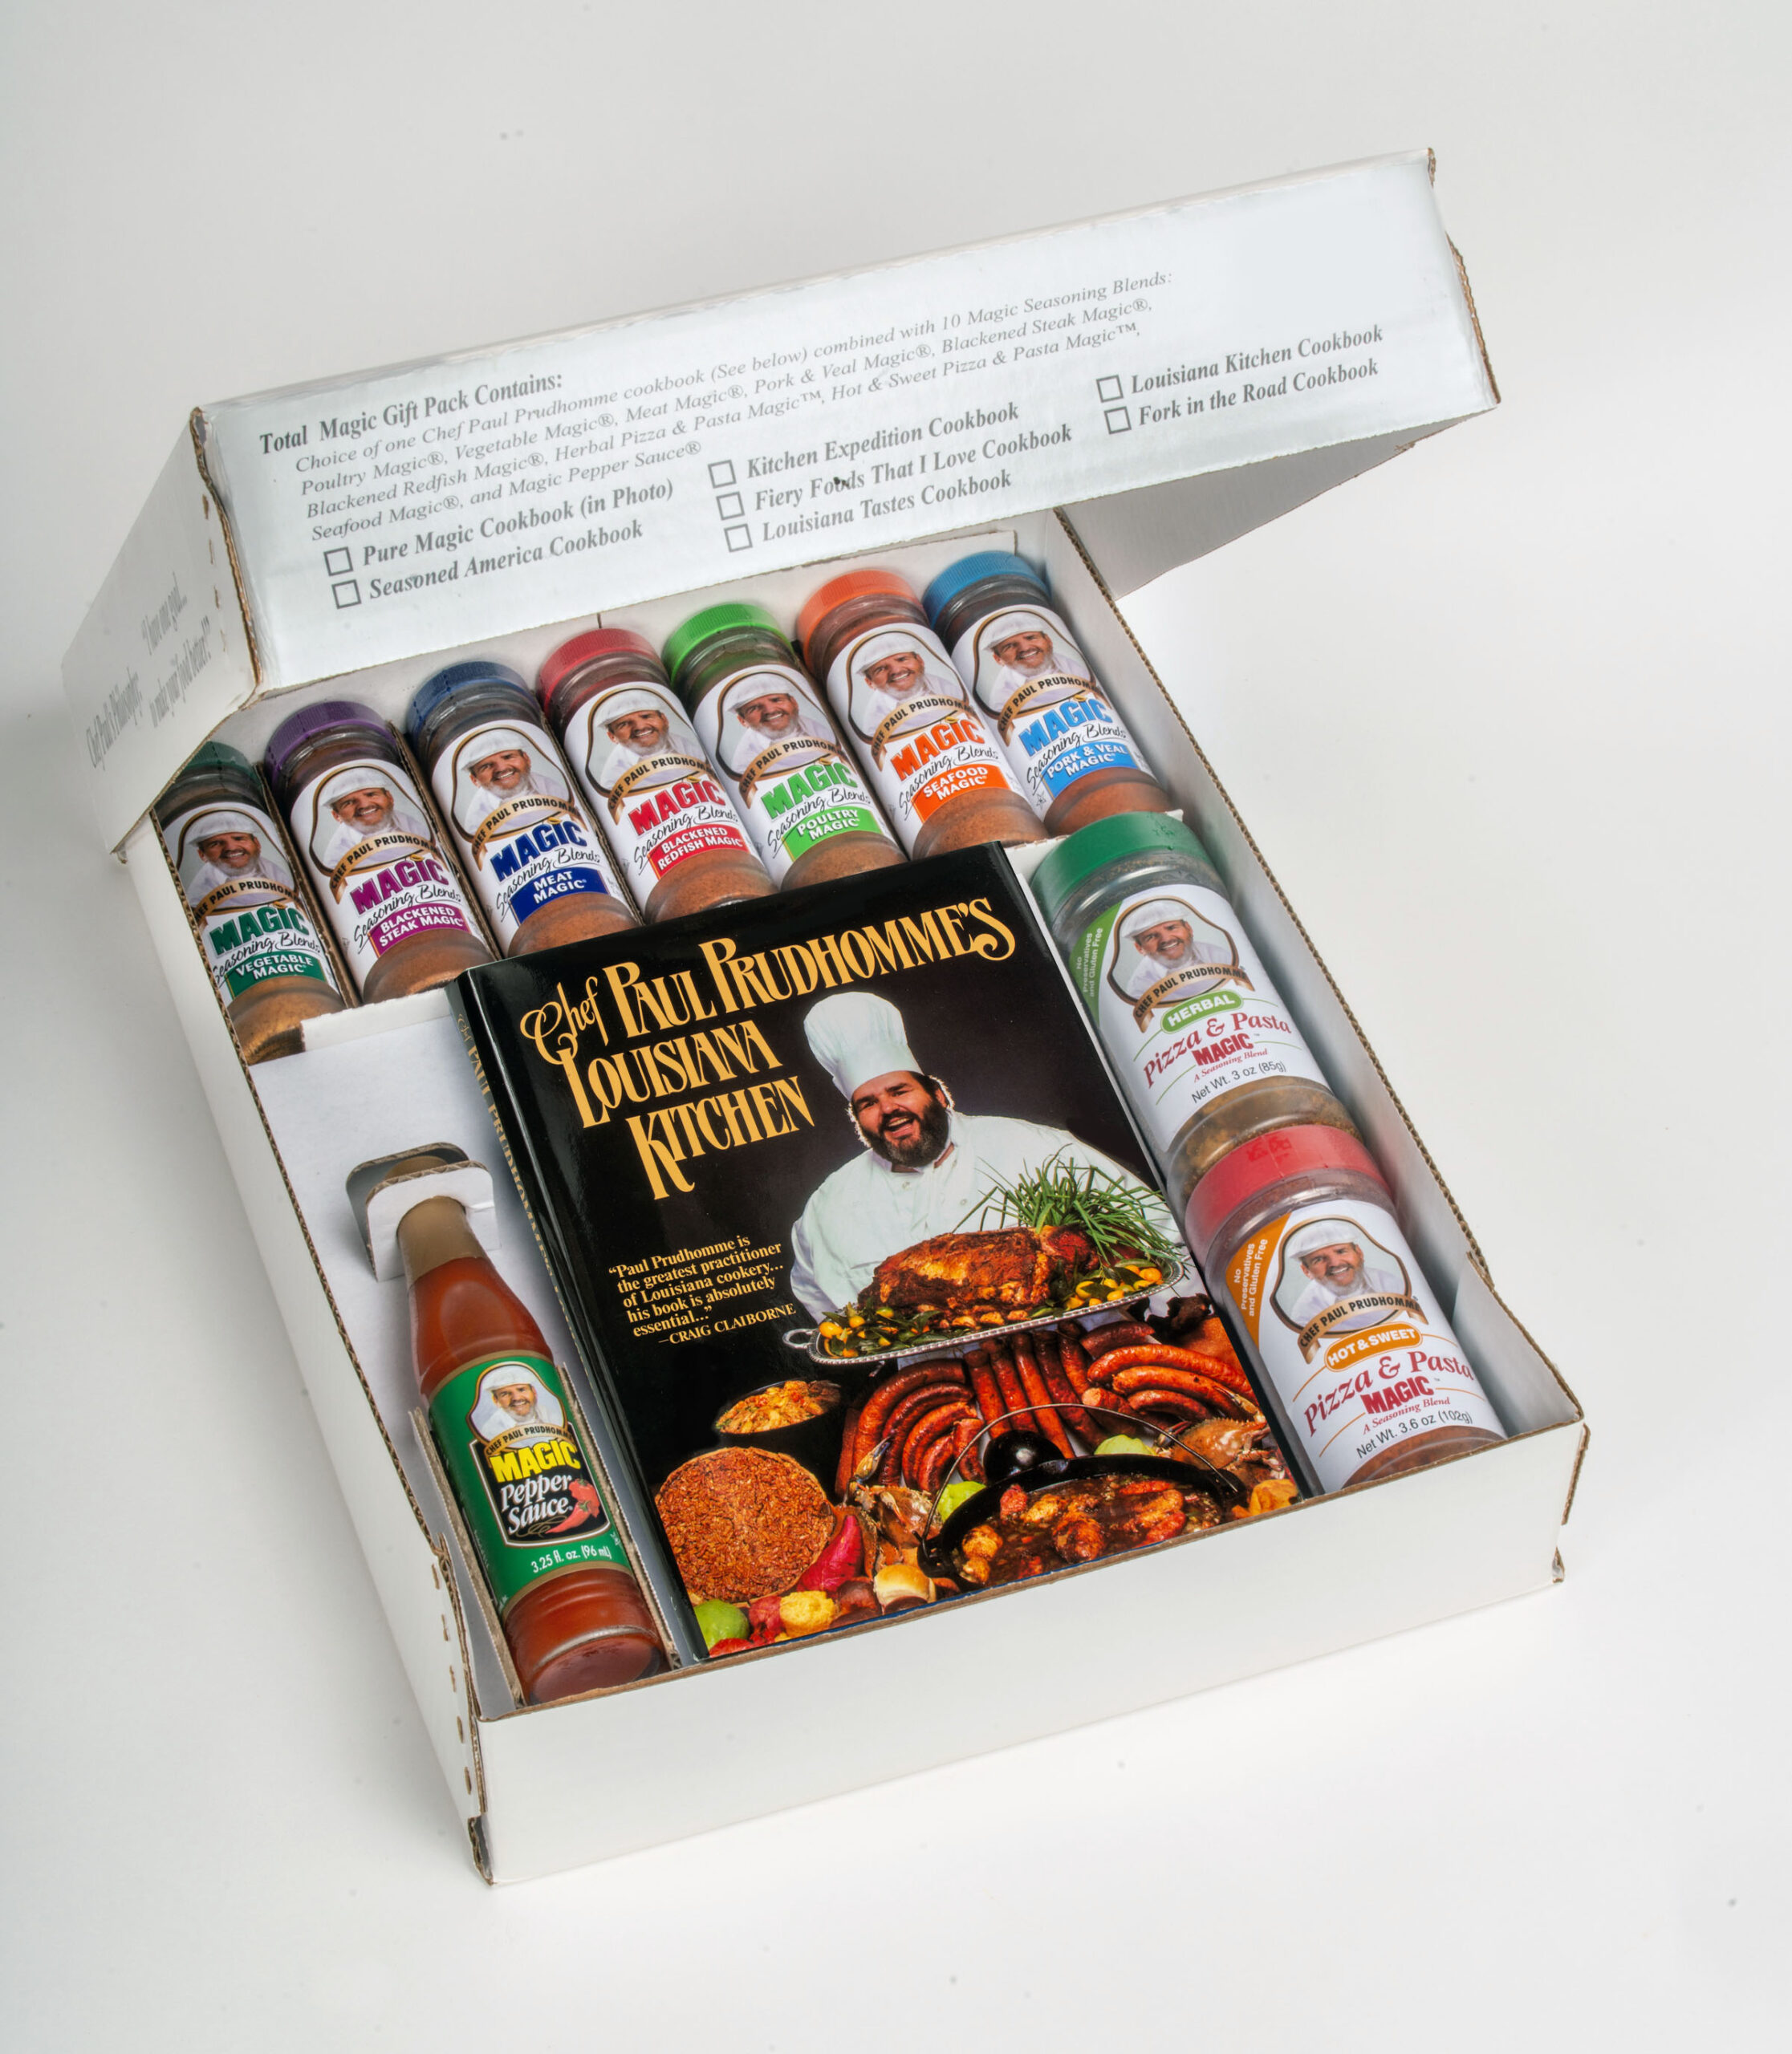 Total Magic Giftpack with Louisiana Kitchen Cookbook - Magic